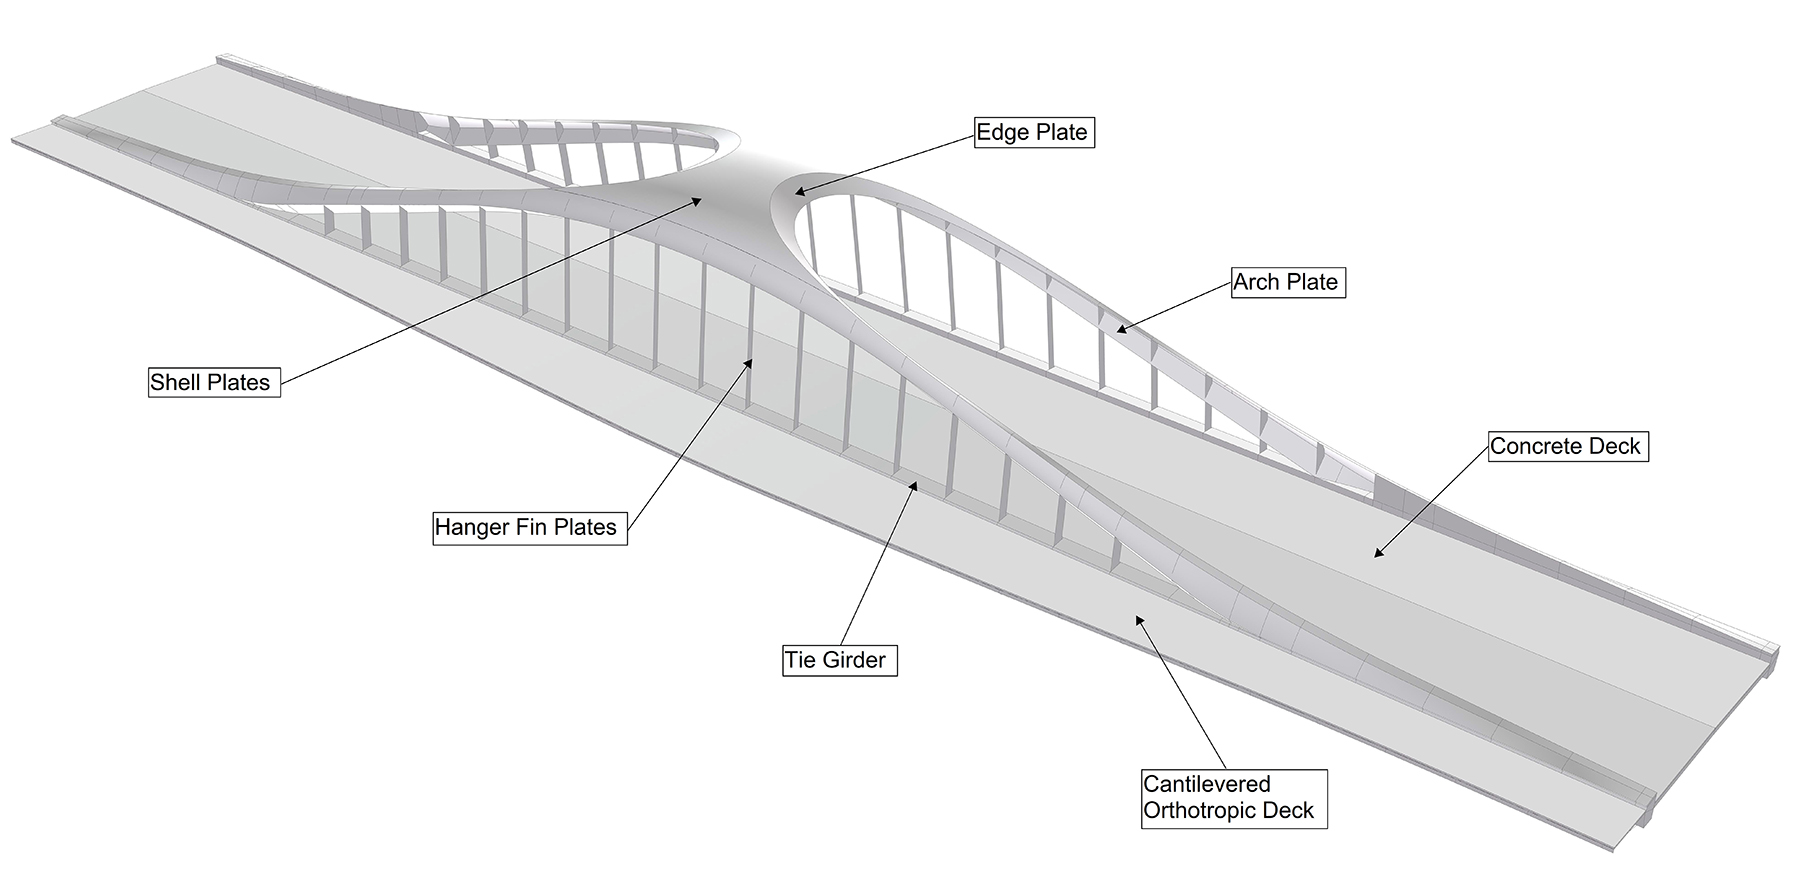 graphic depicting elements of bridge